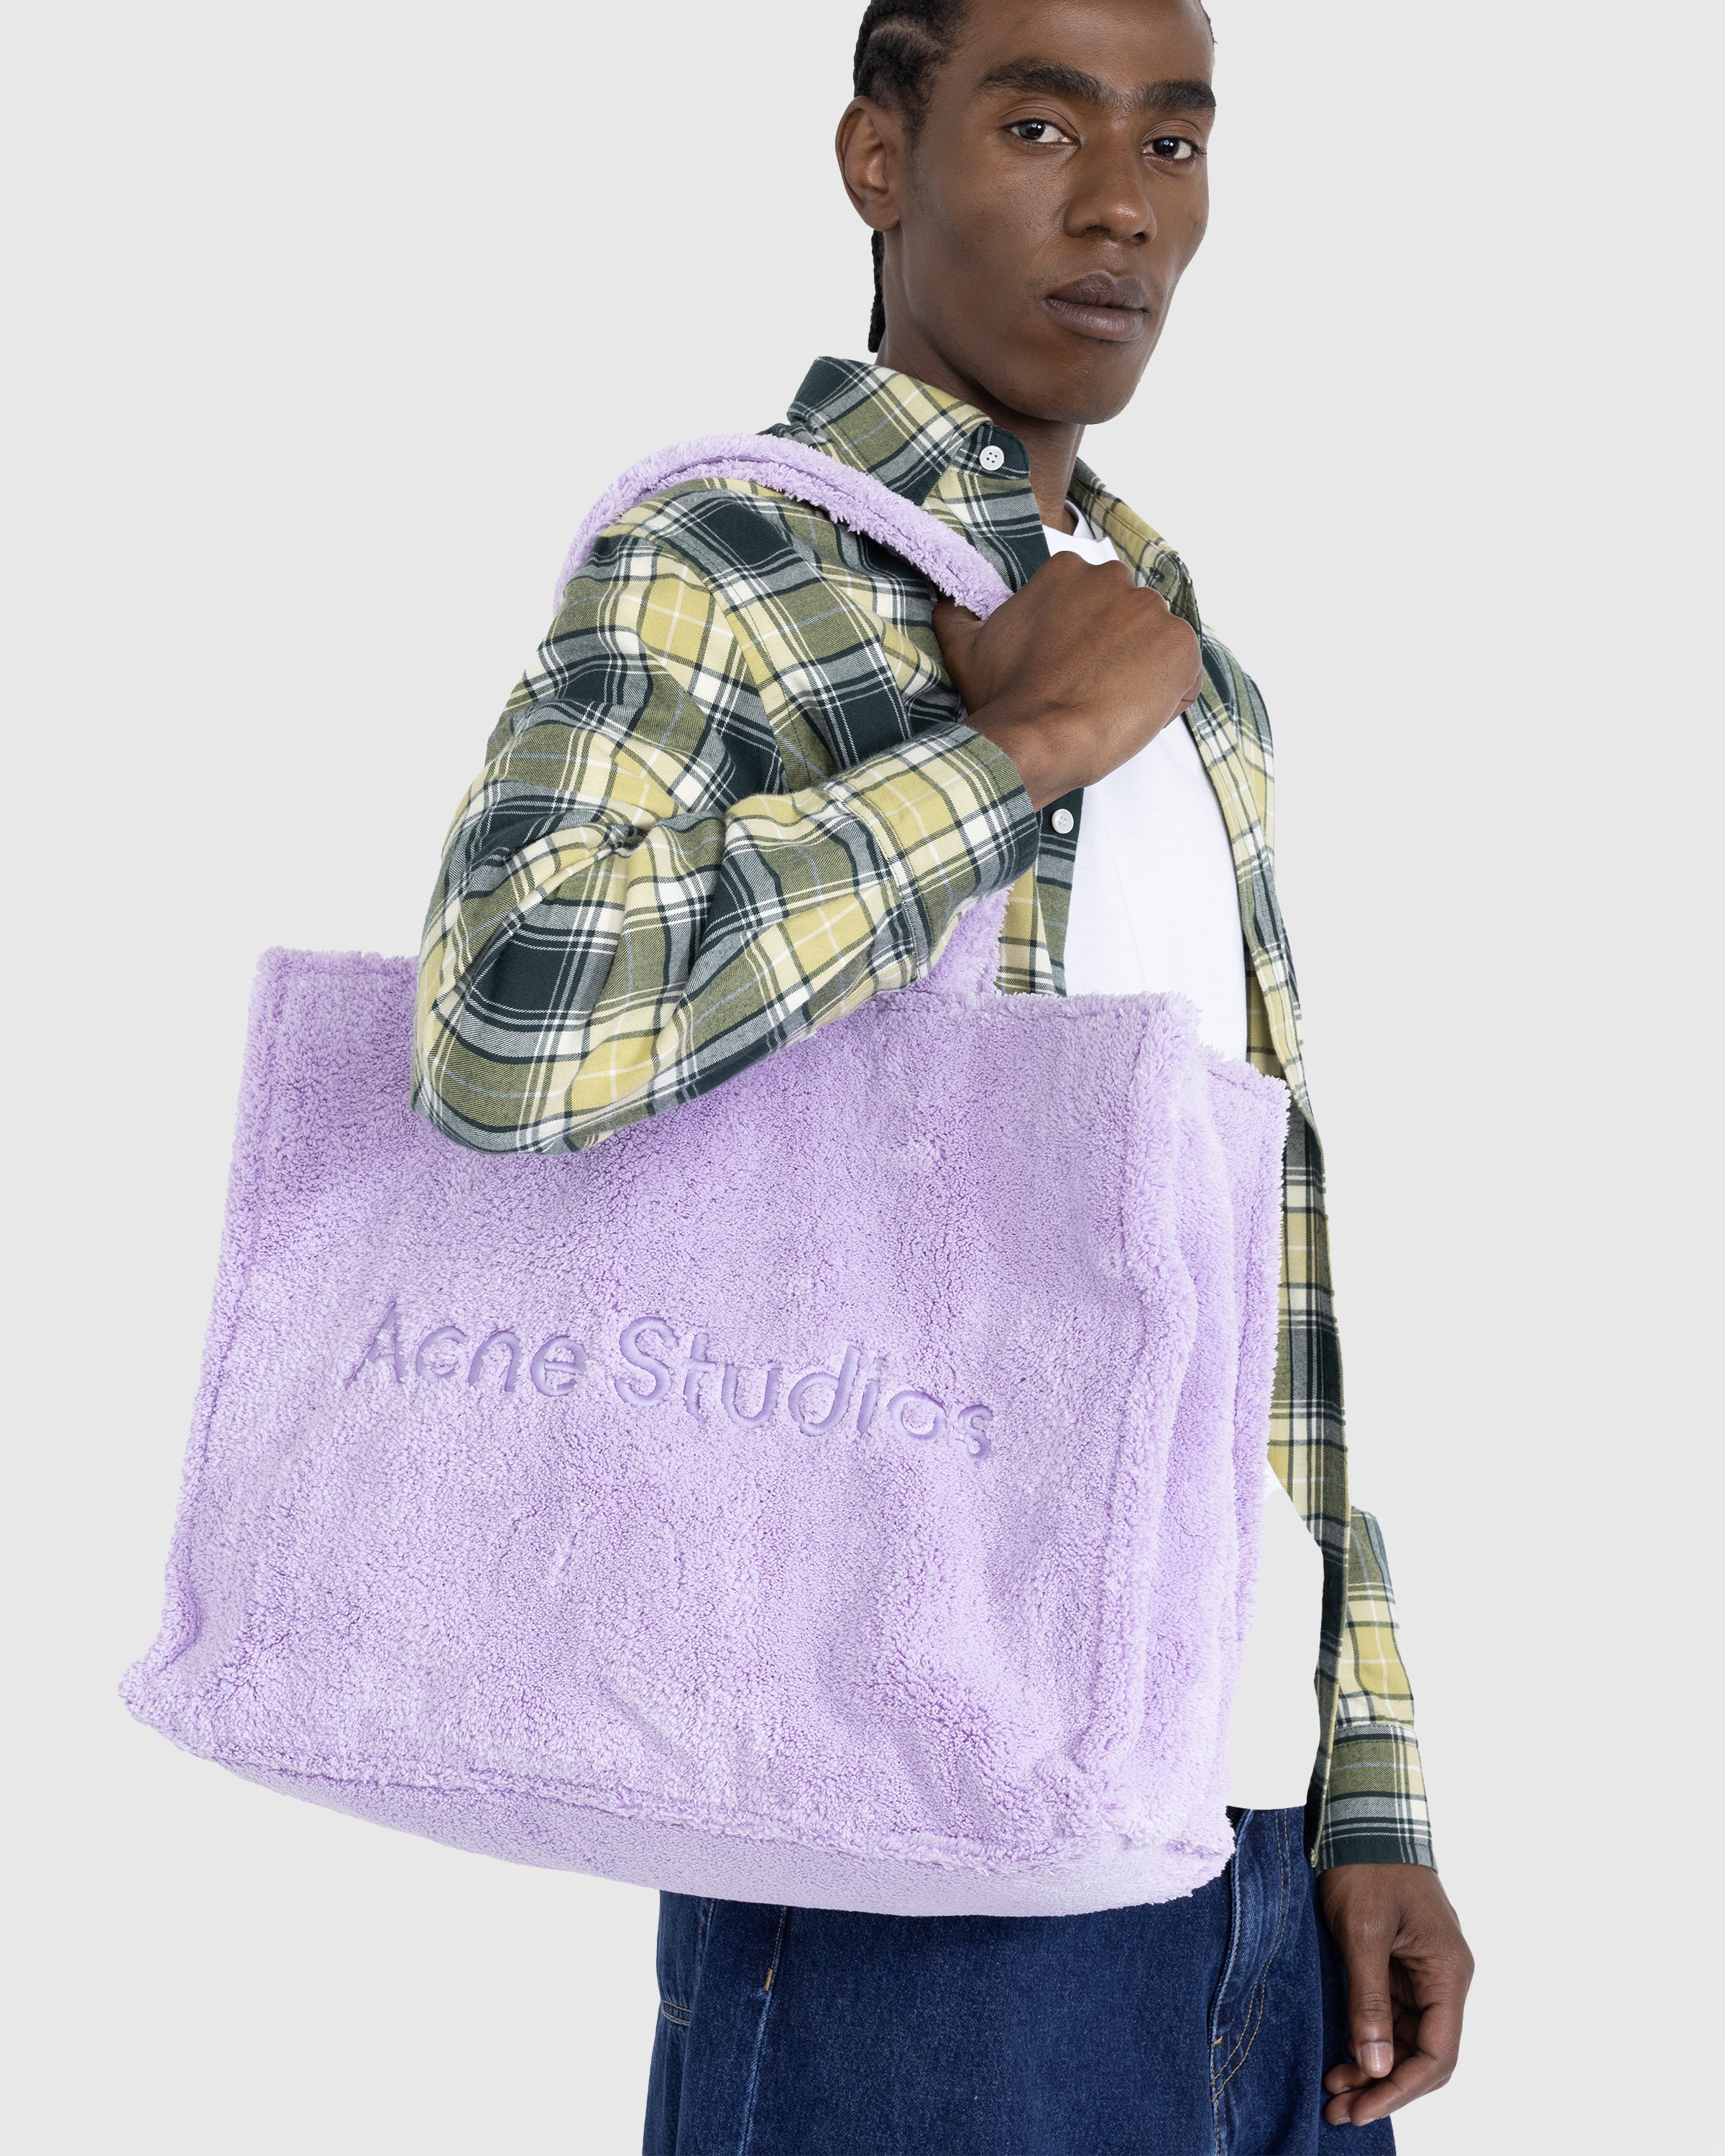 Acne Studios – Furry Logo Shoulder Tote Bag Lilac Purple